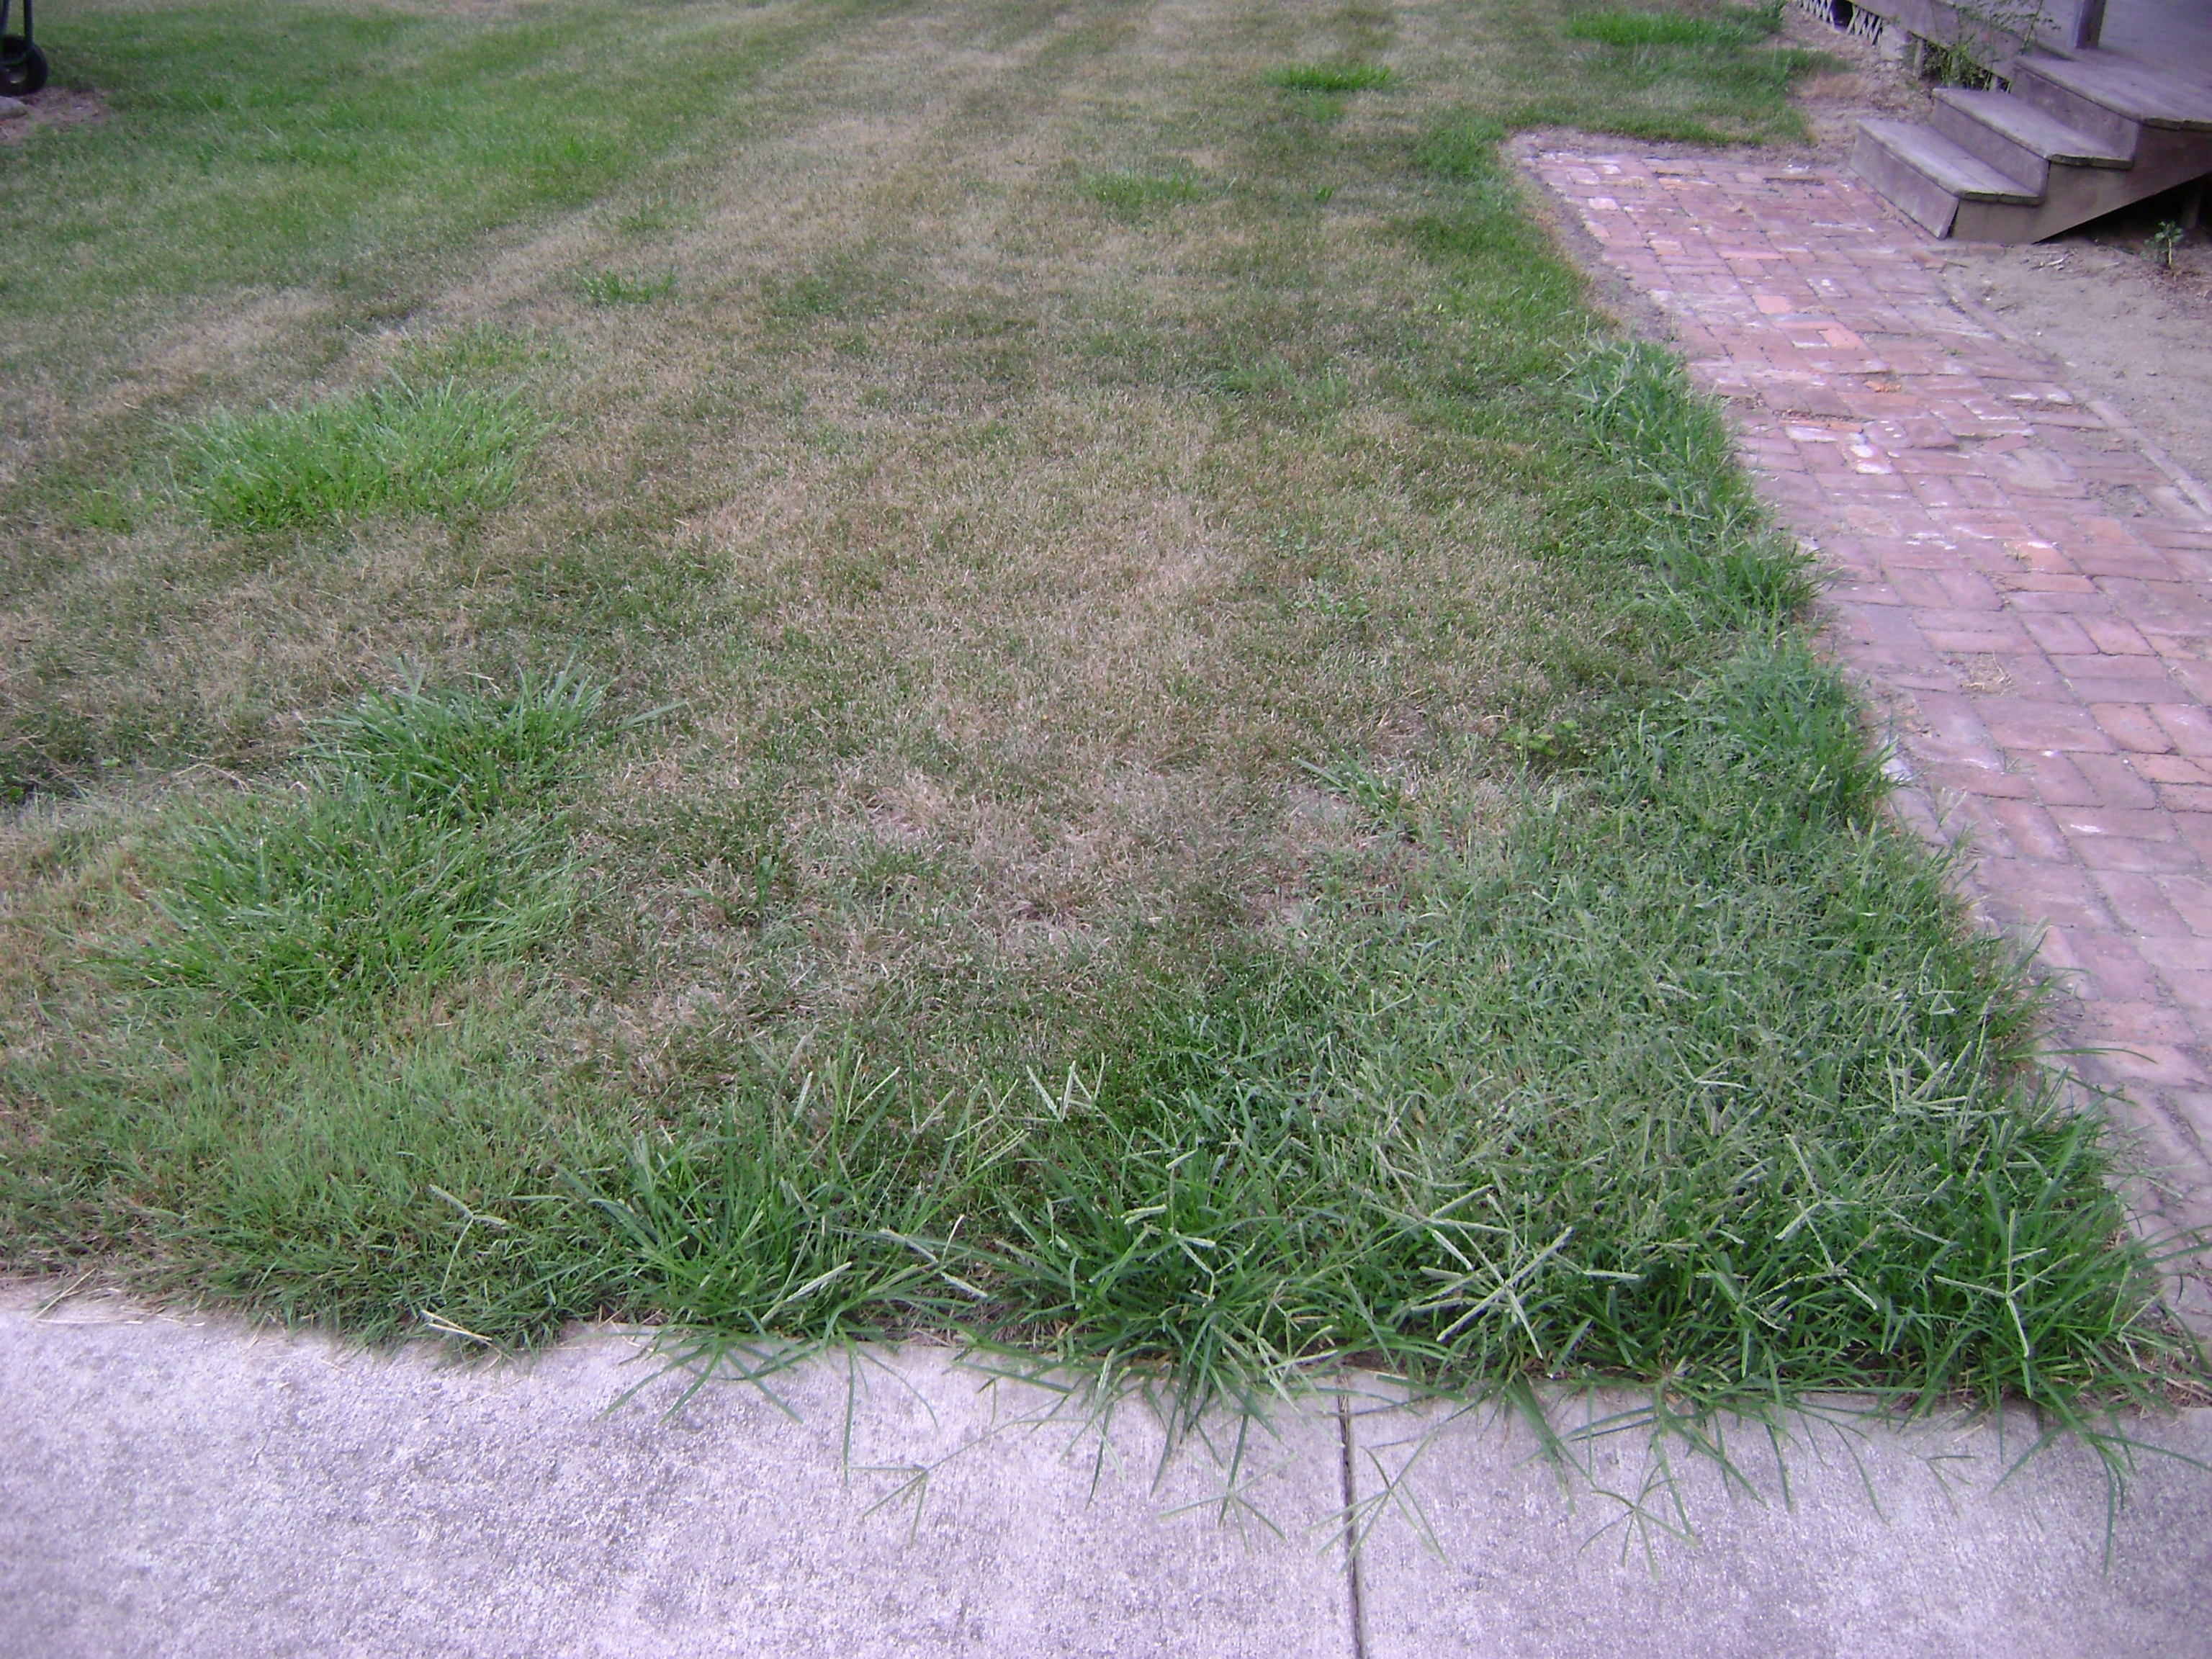 multiple grassy weeds